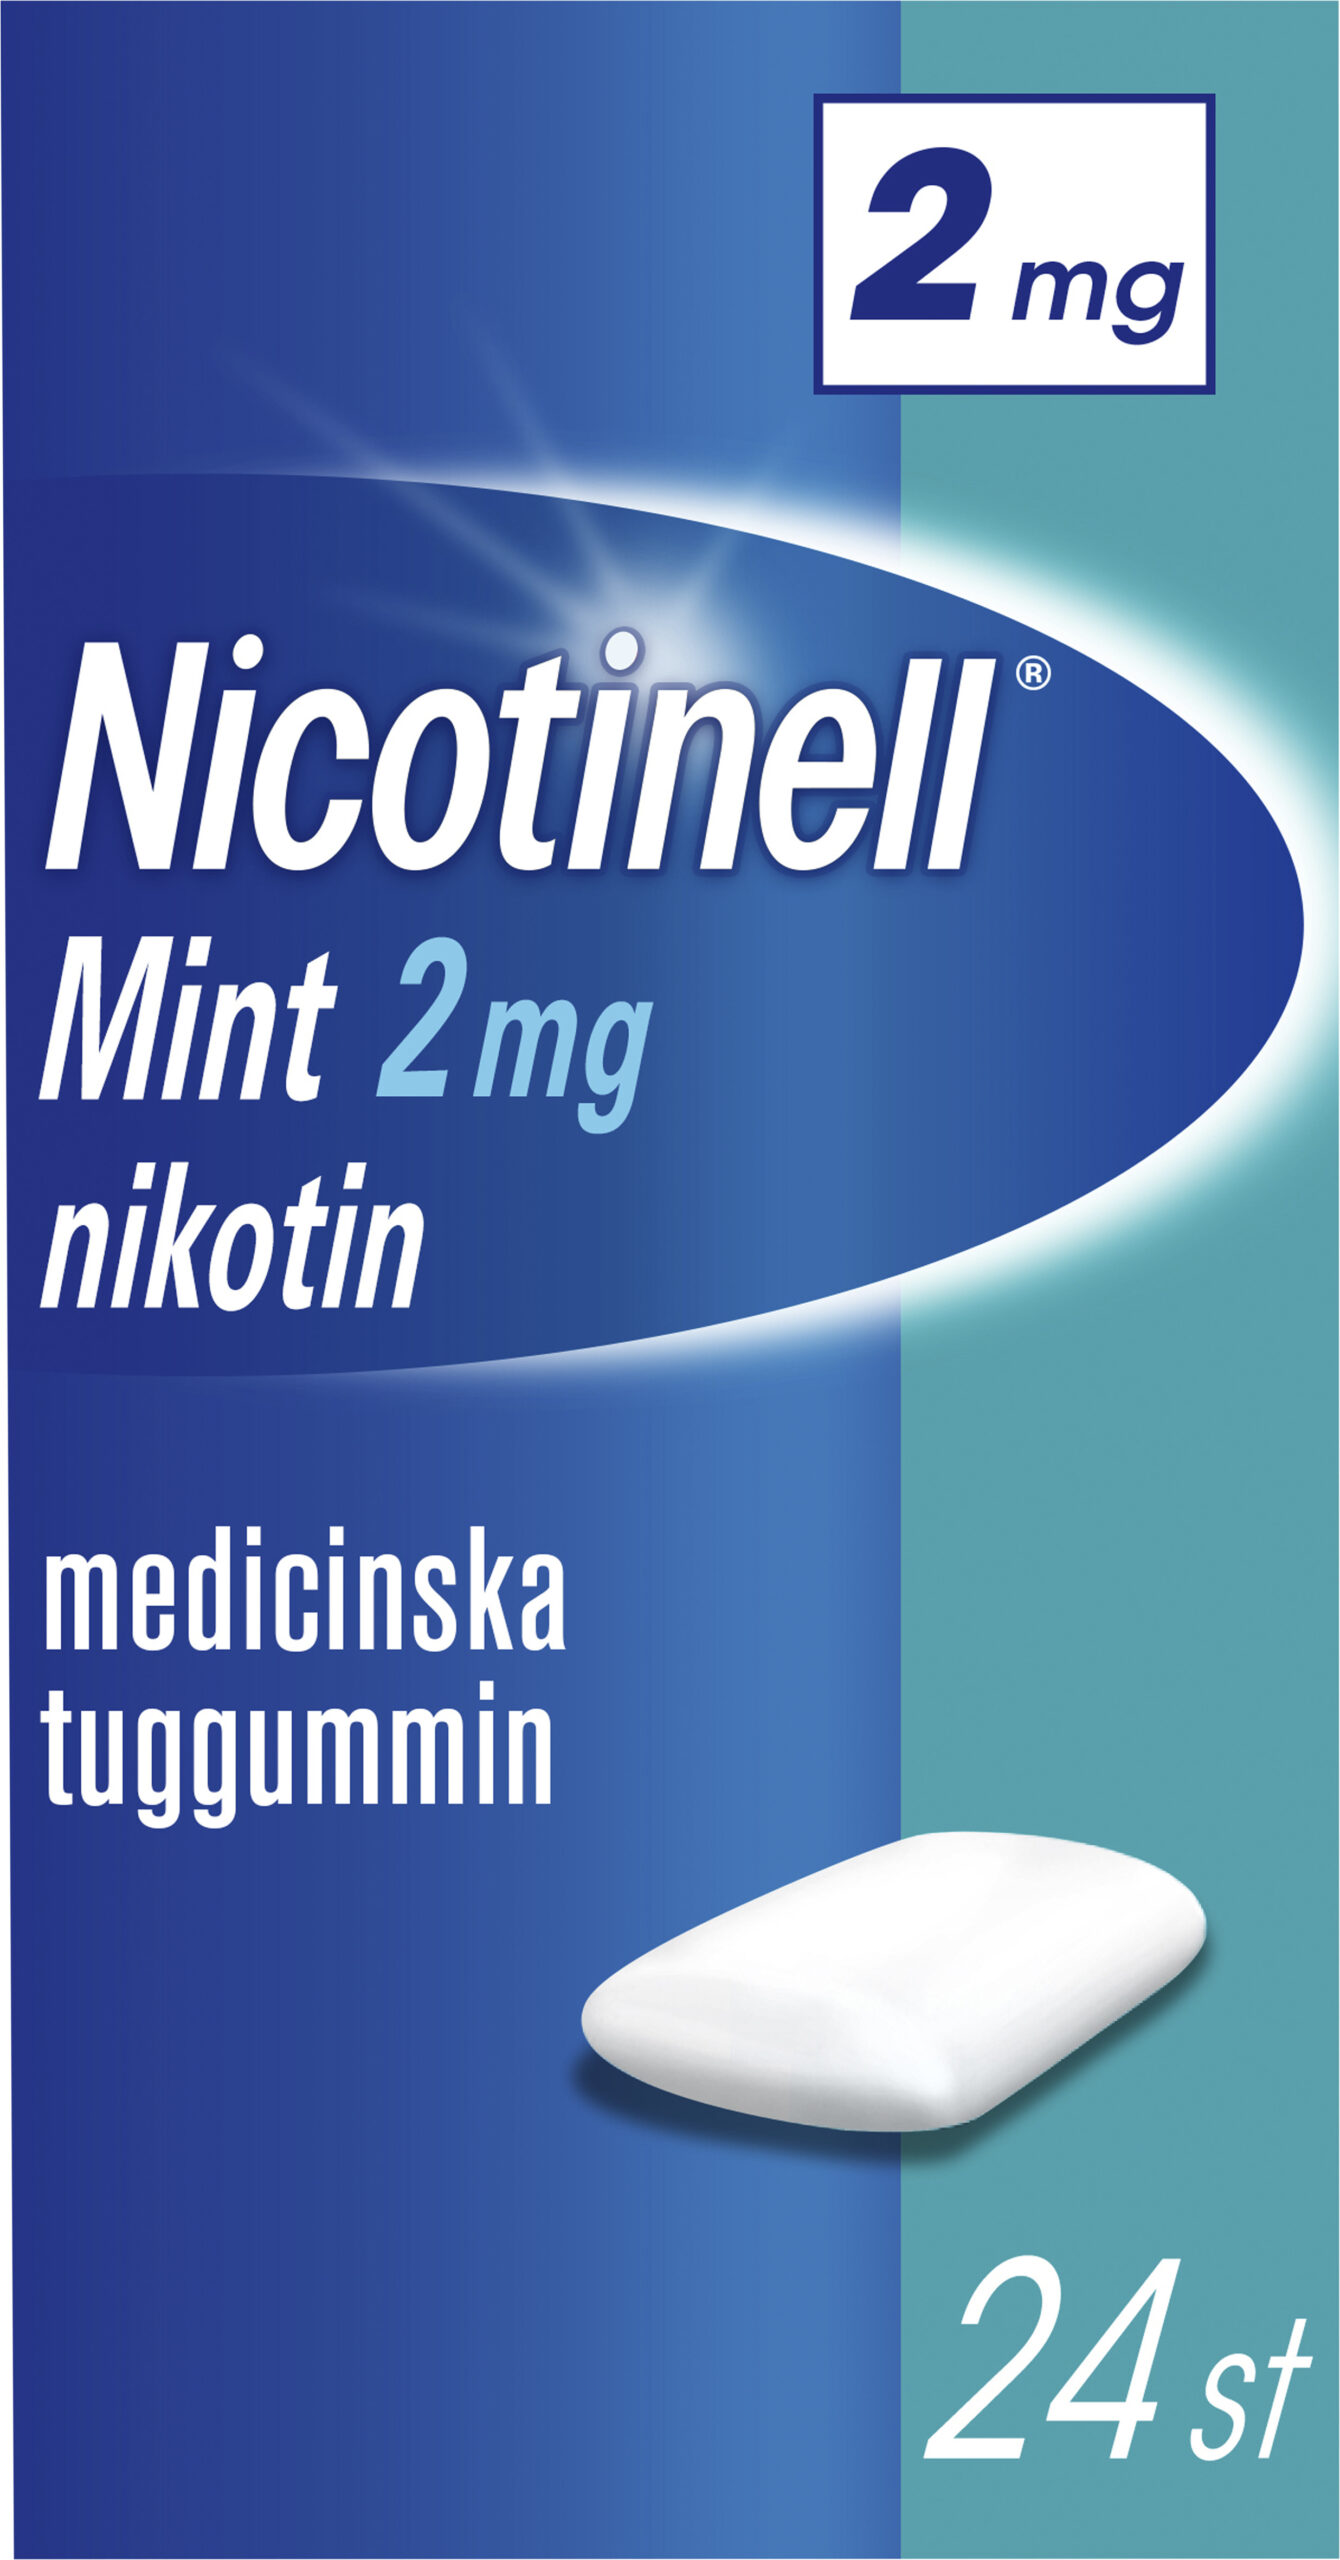 Nicotinell Mint medicinskt tuggummi 2 mg 24 st